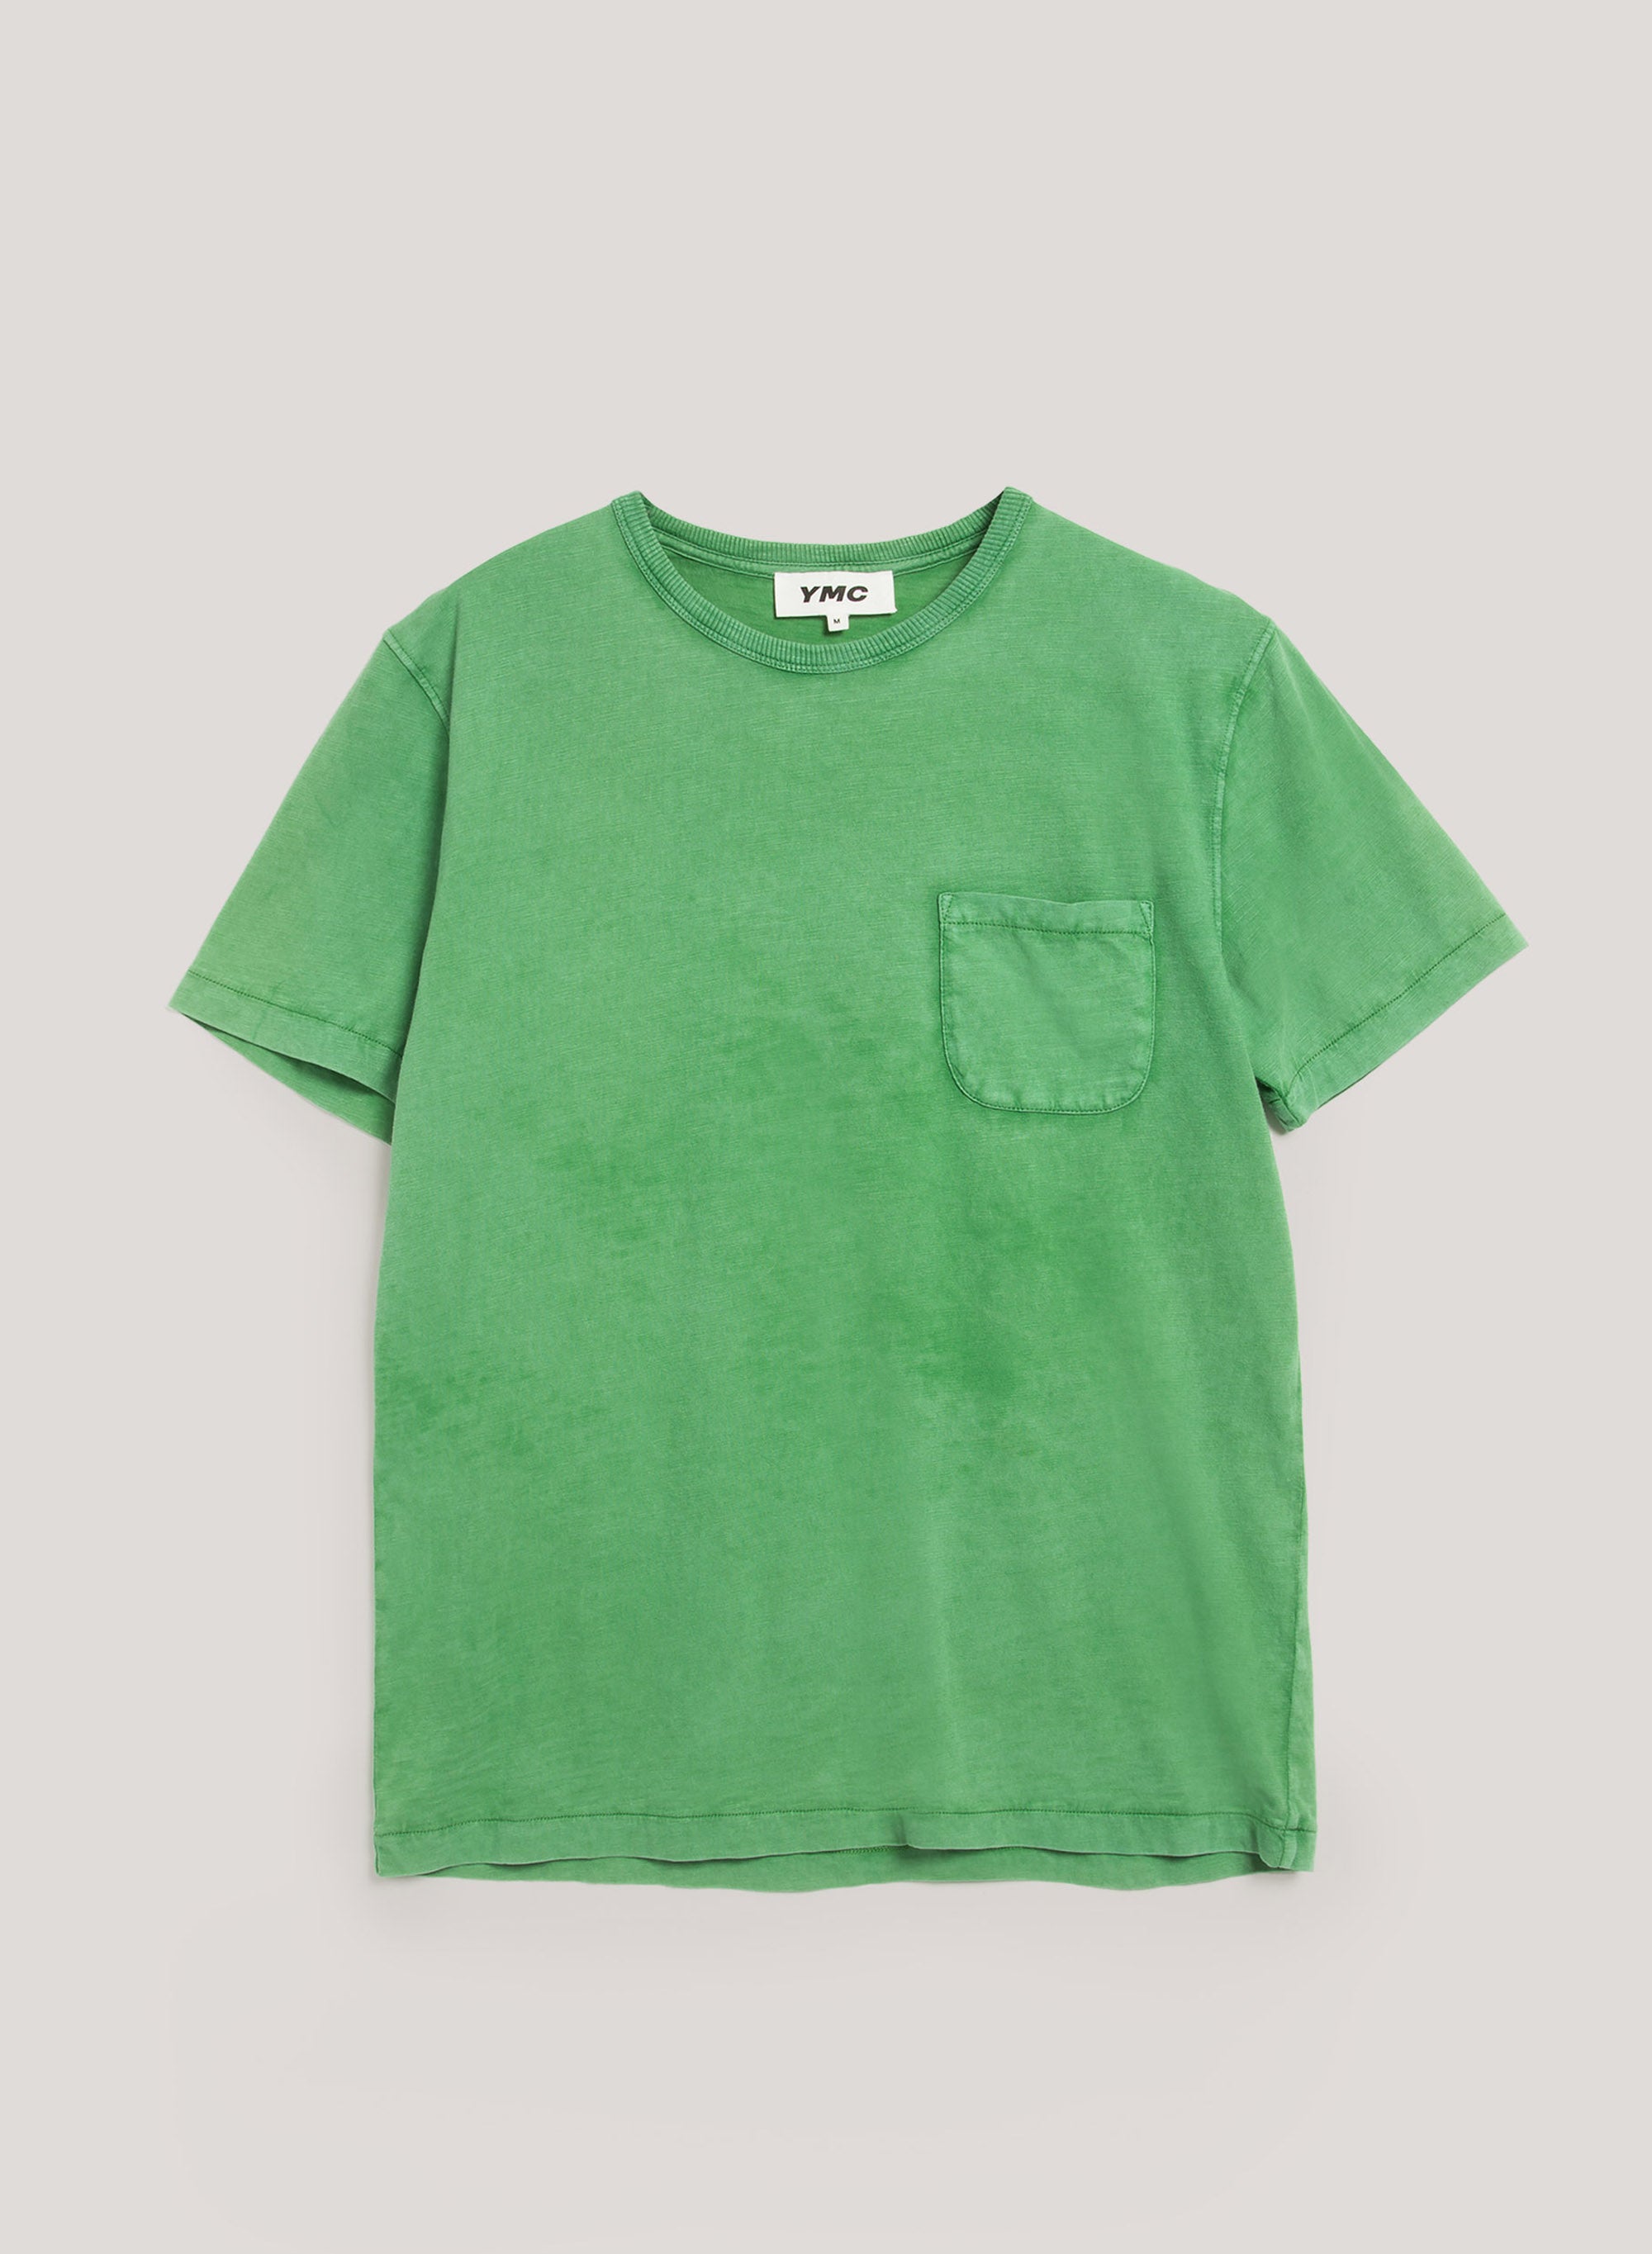 YMC WIld Ones Pocket T-Shirt Green